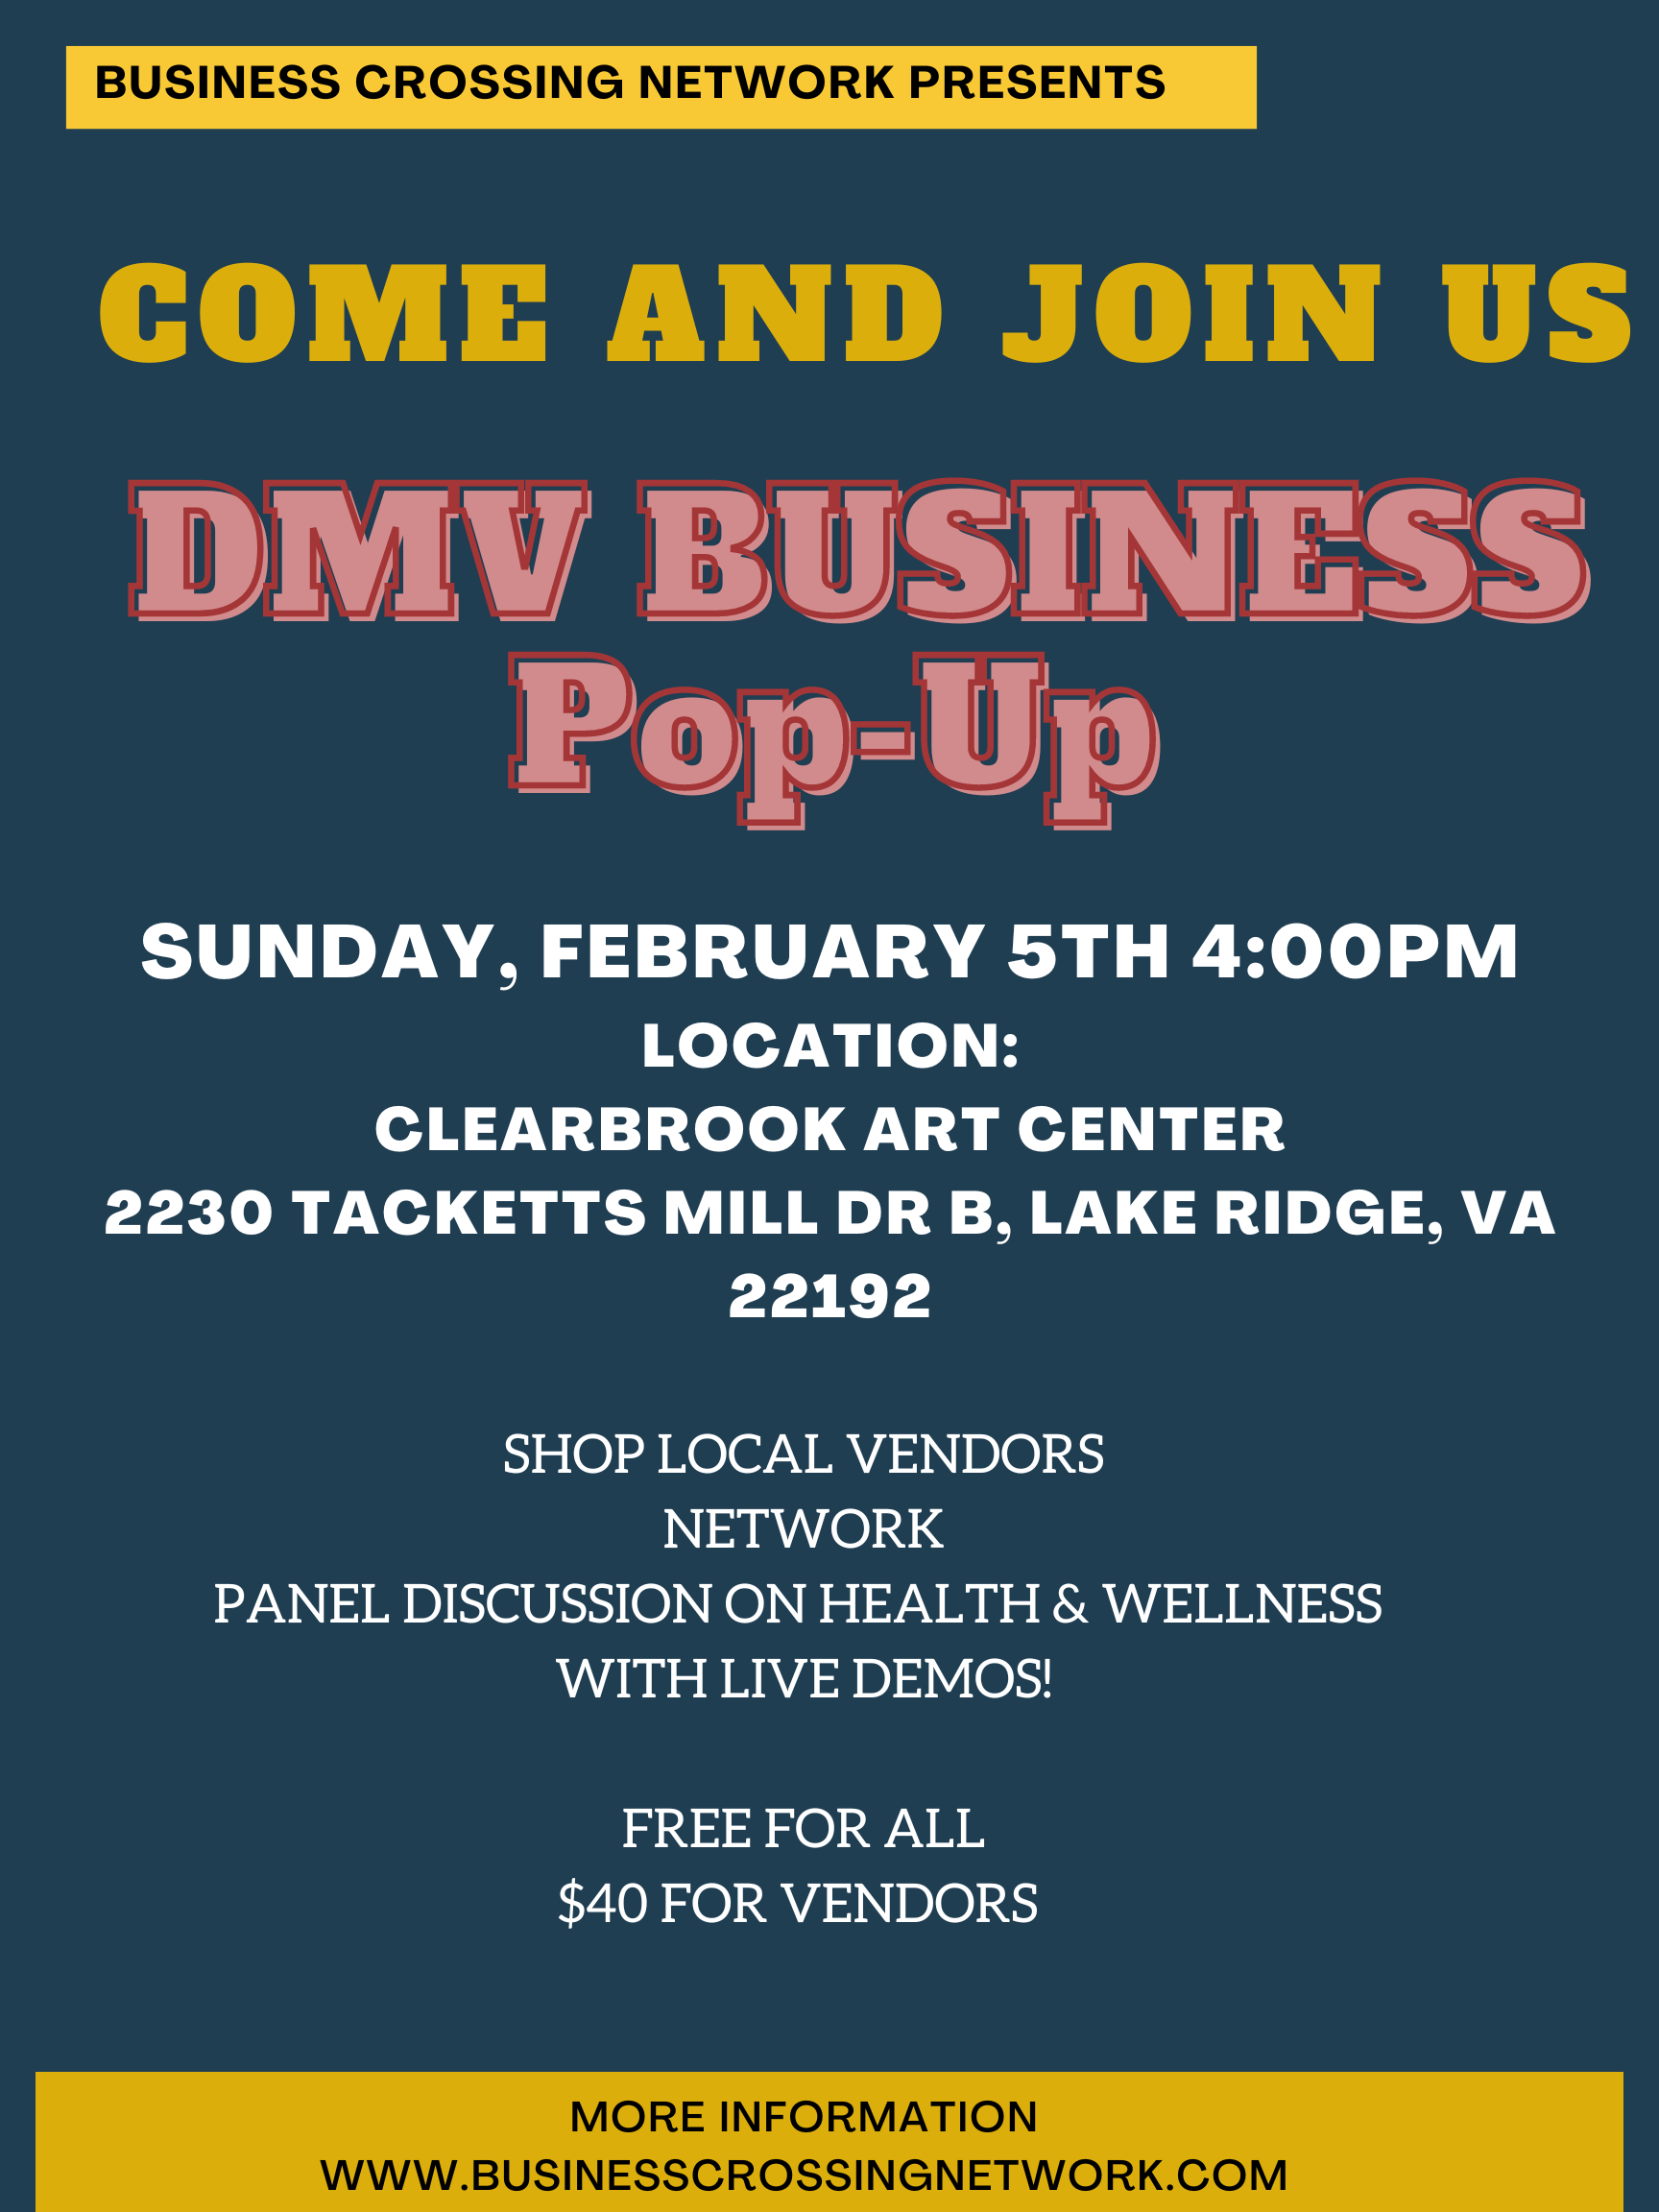 DMV Business Pop-Up This Sunday!